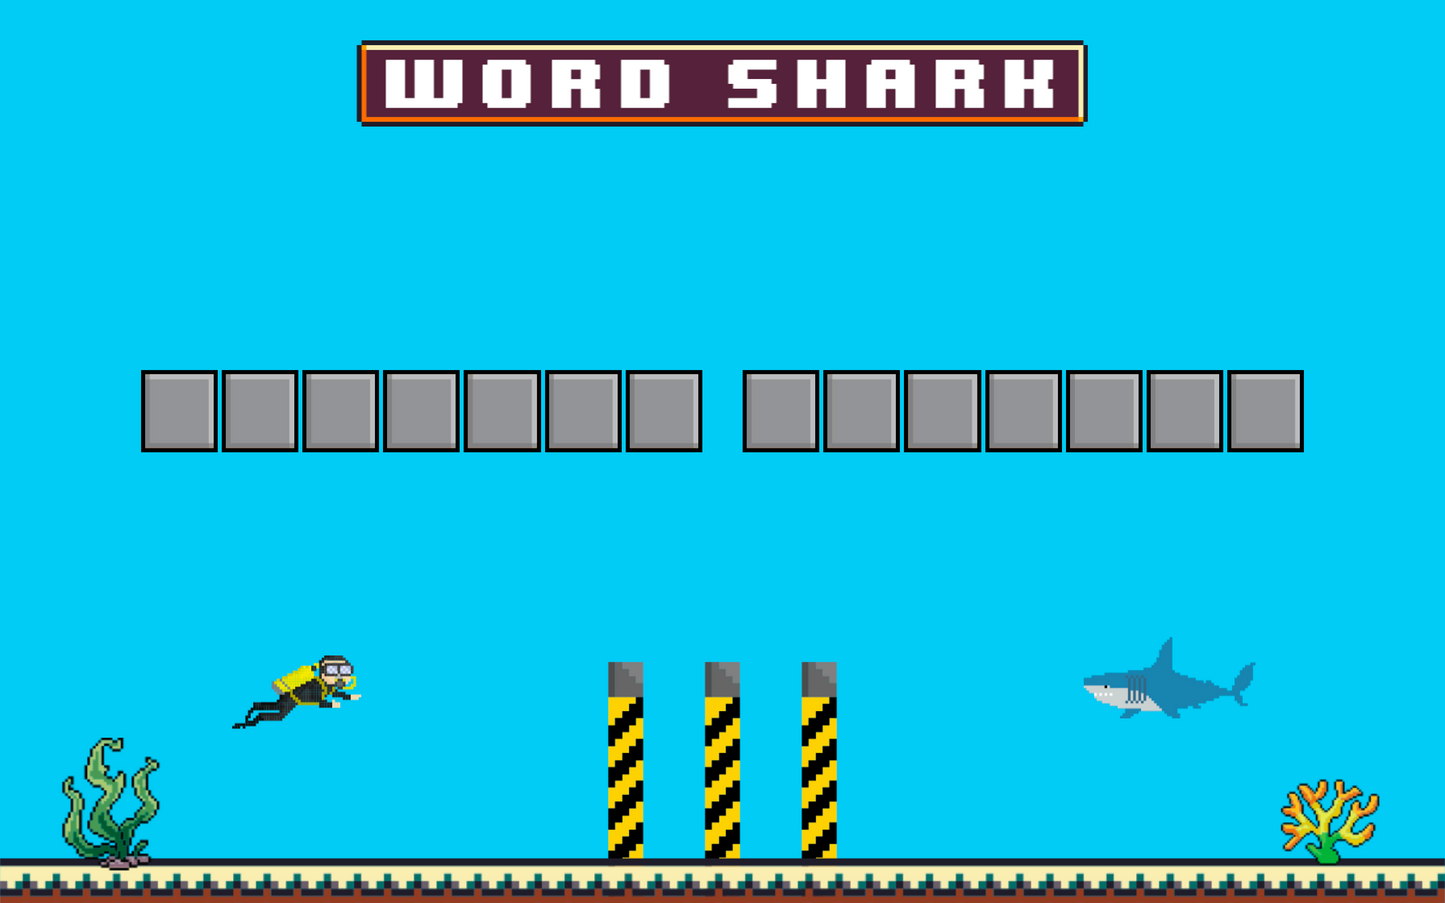 Word Shark